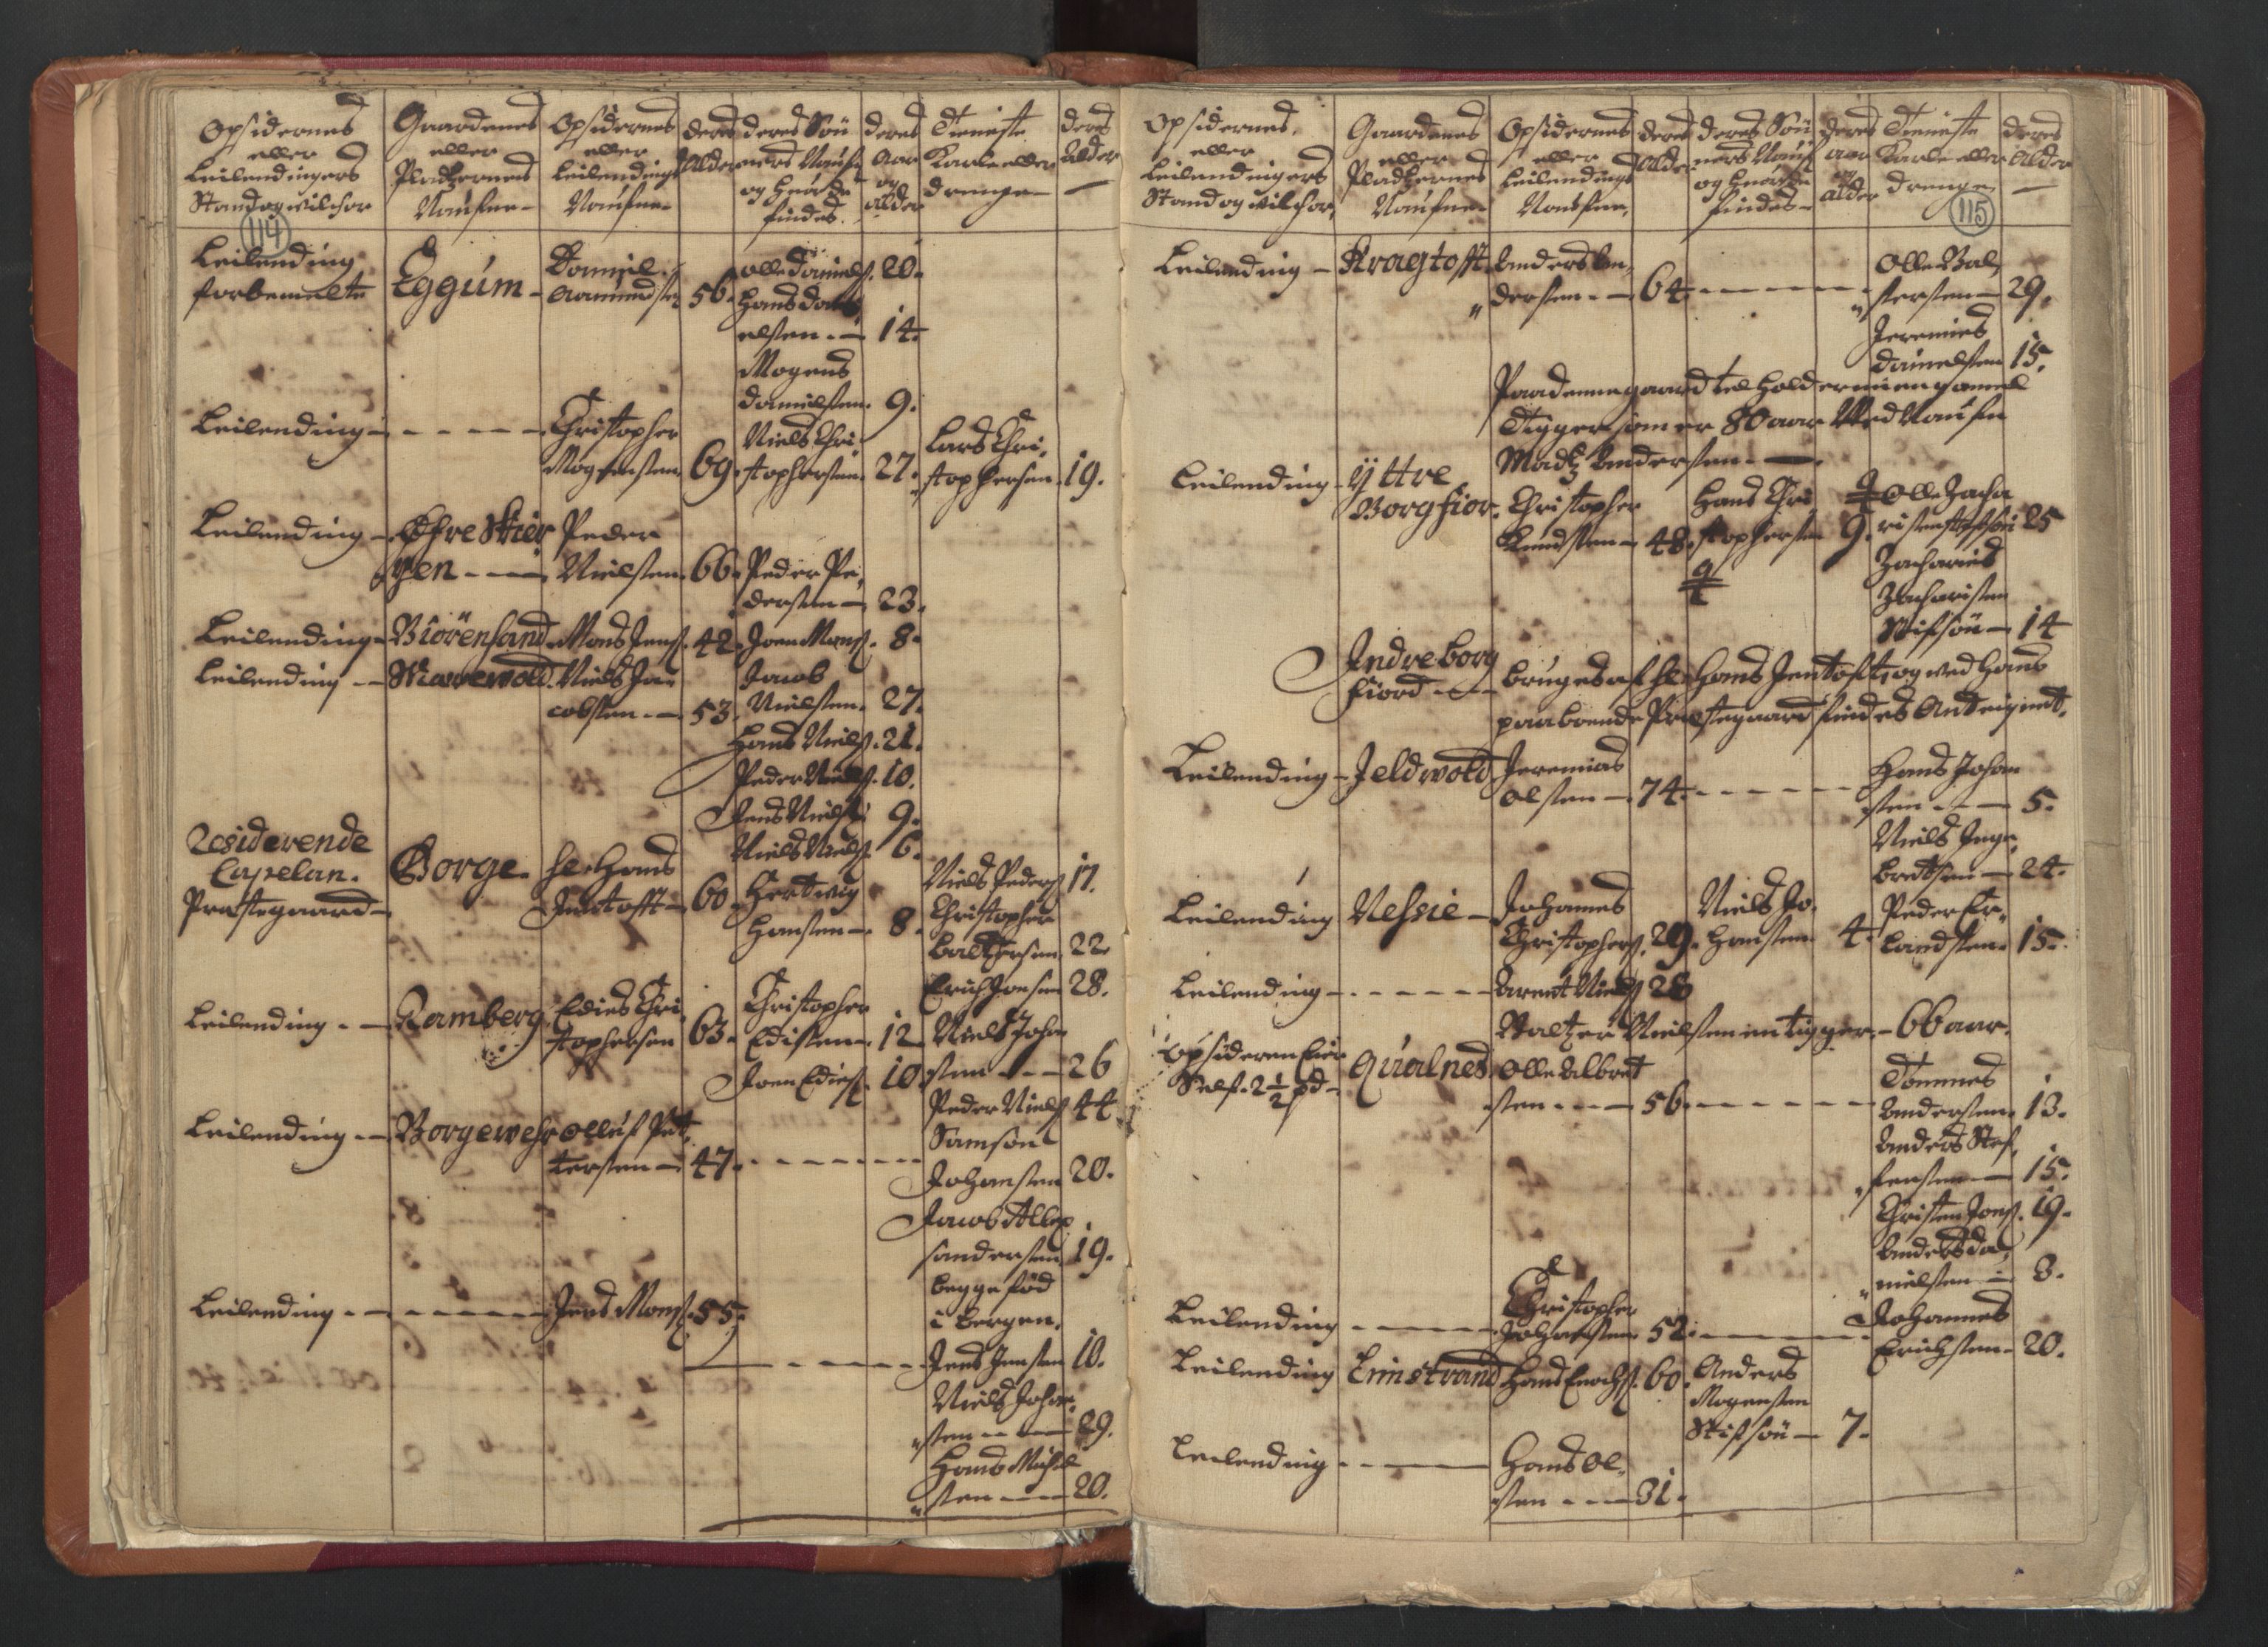 RA, Manntallet 1701, nr. 18: Vesterålen, Andenes og Lofoten fogderi, 1701, s. 114-115